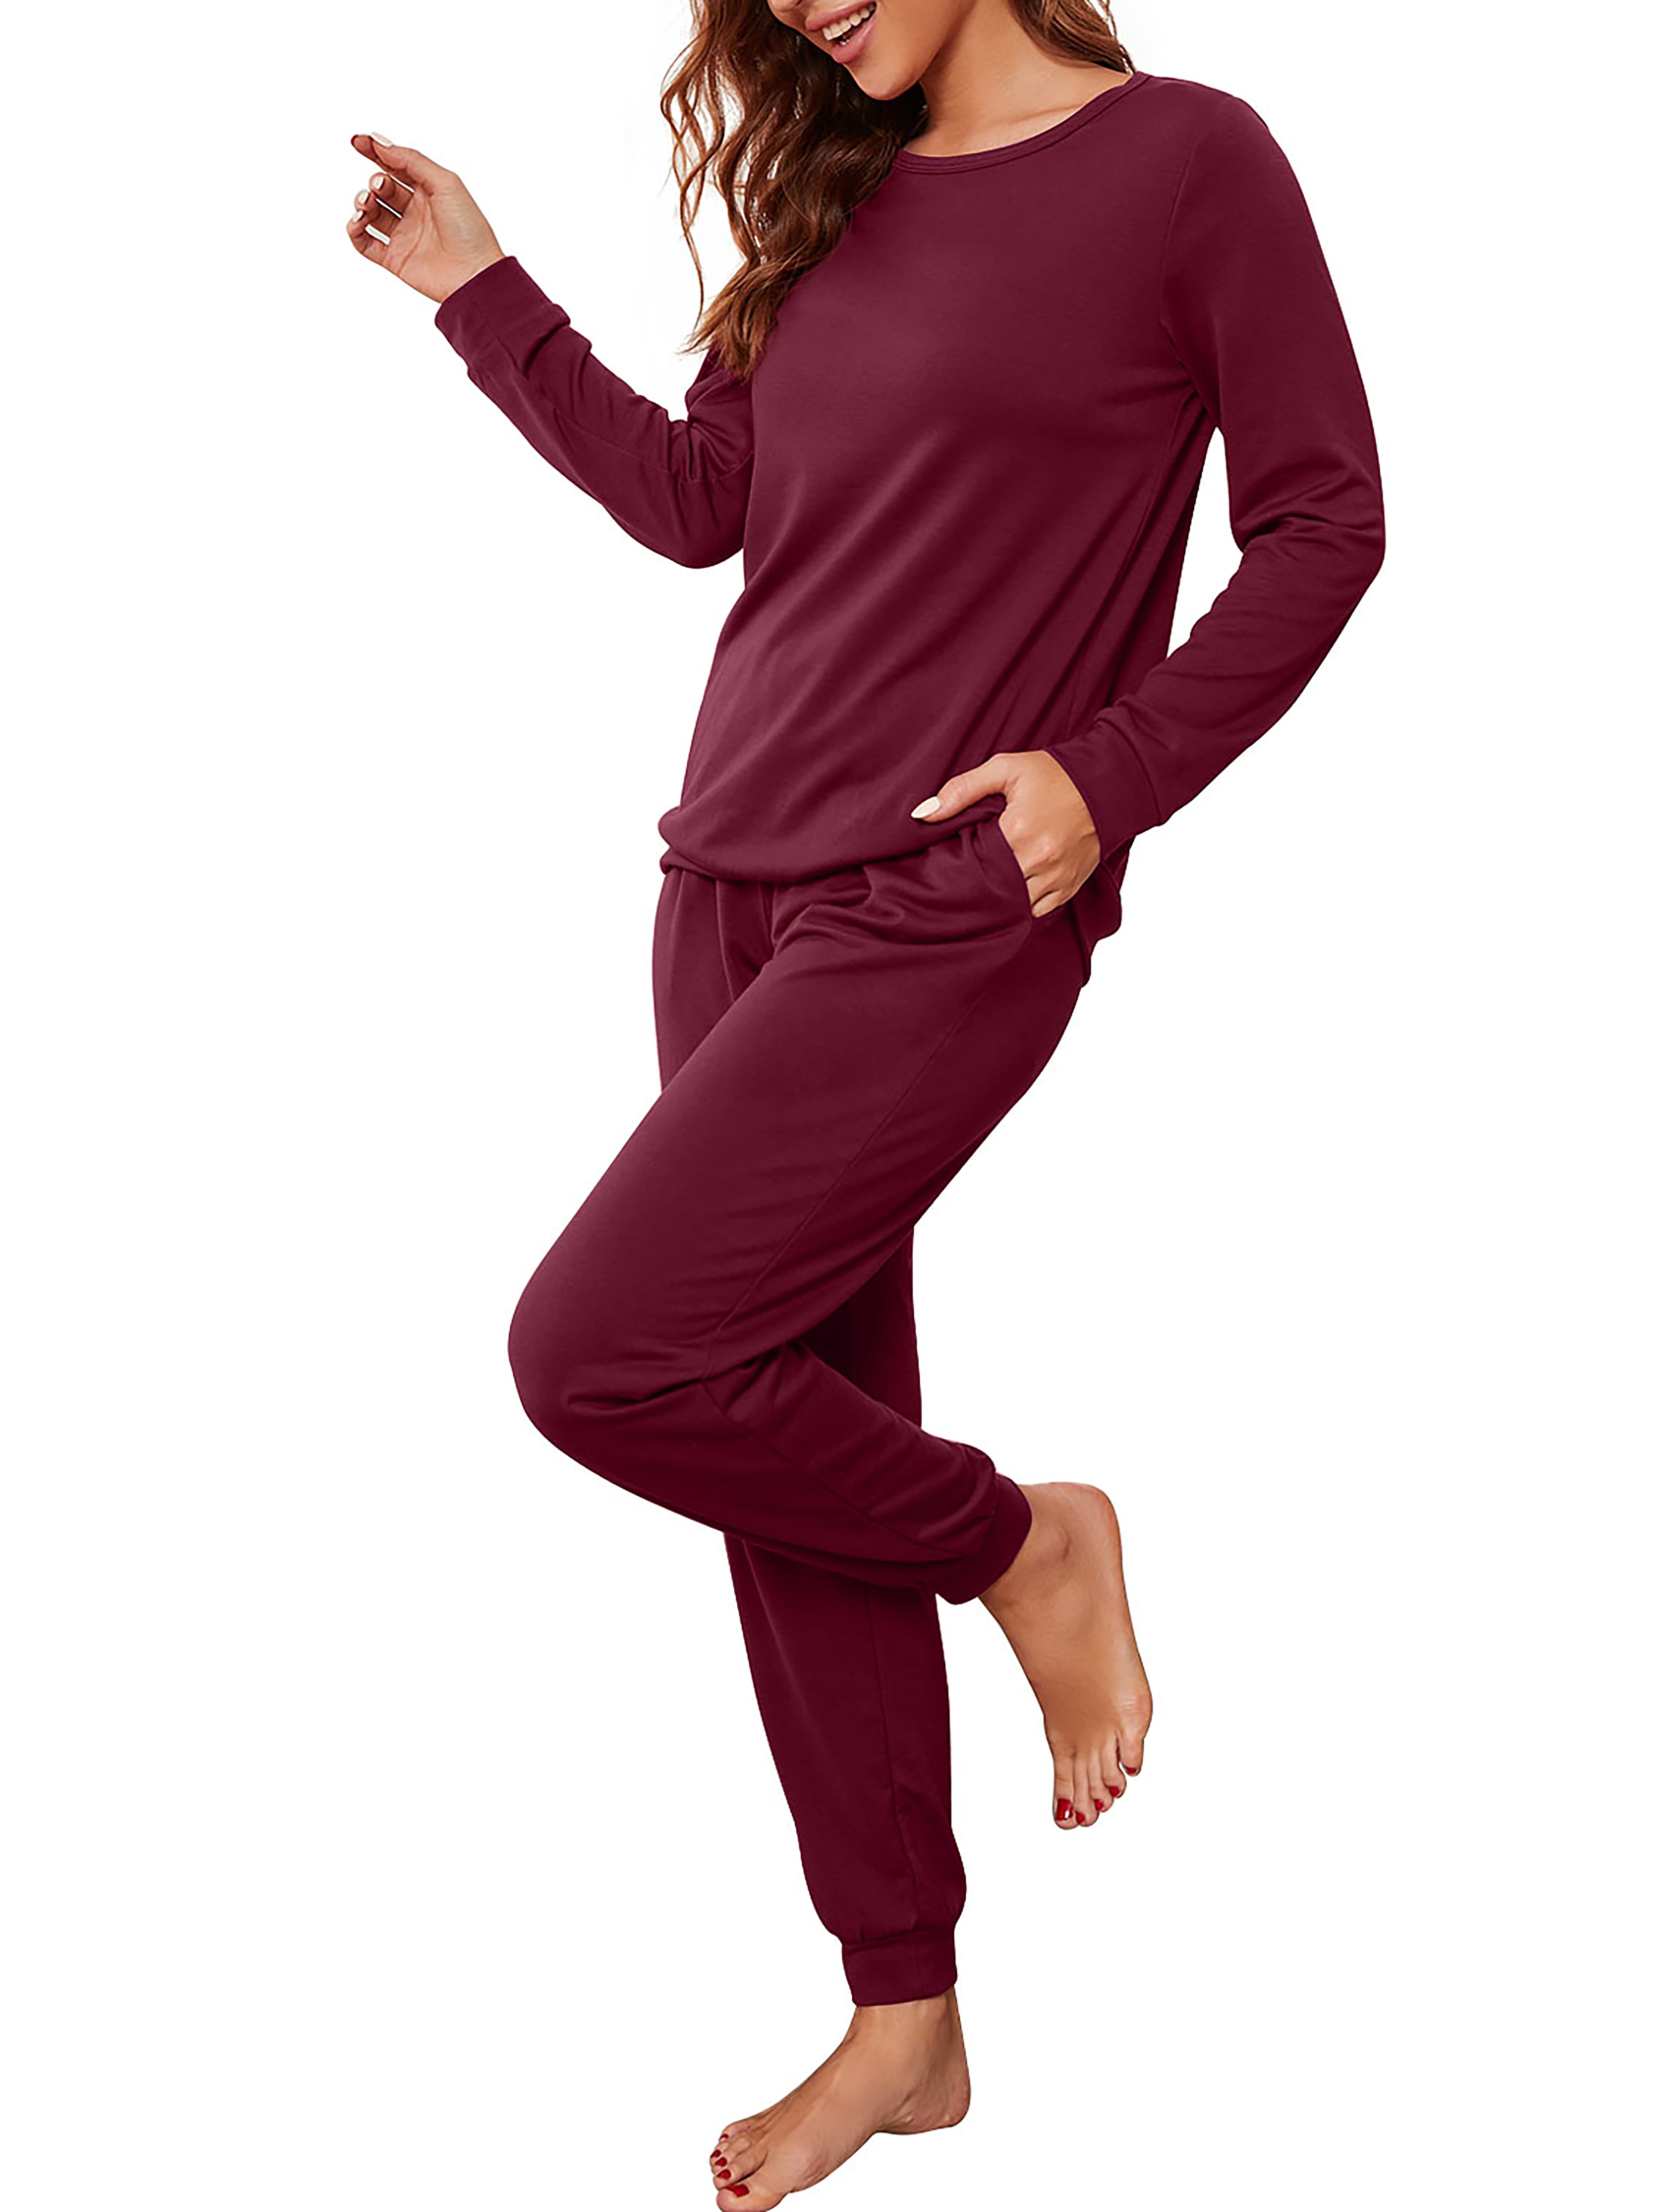 Lisingtool Pajamas for Women Set Womens Pajama Set Long Sleeve Sleepwear  Nightwear Soft Sets with Pockets Pajama Pants Wine